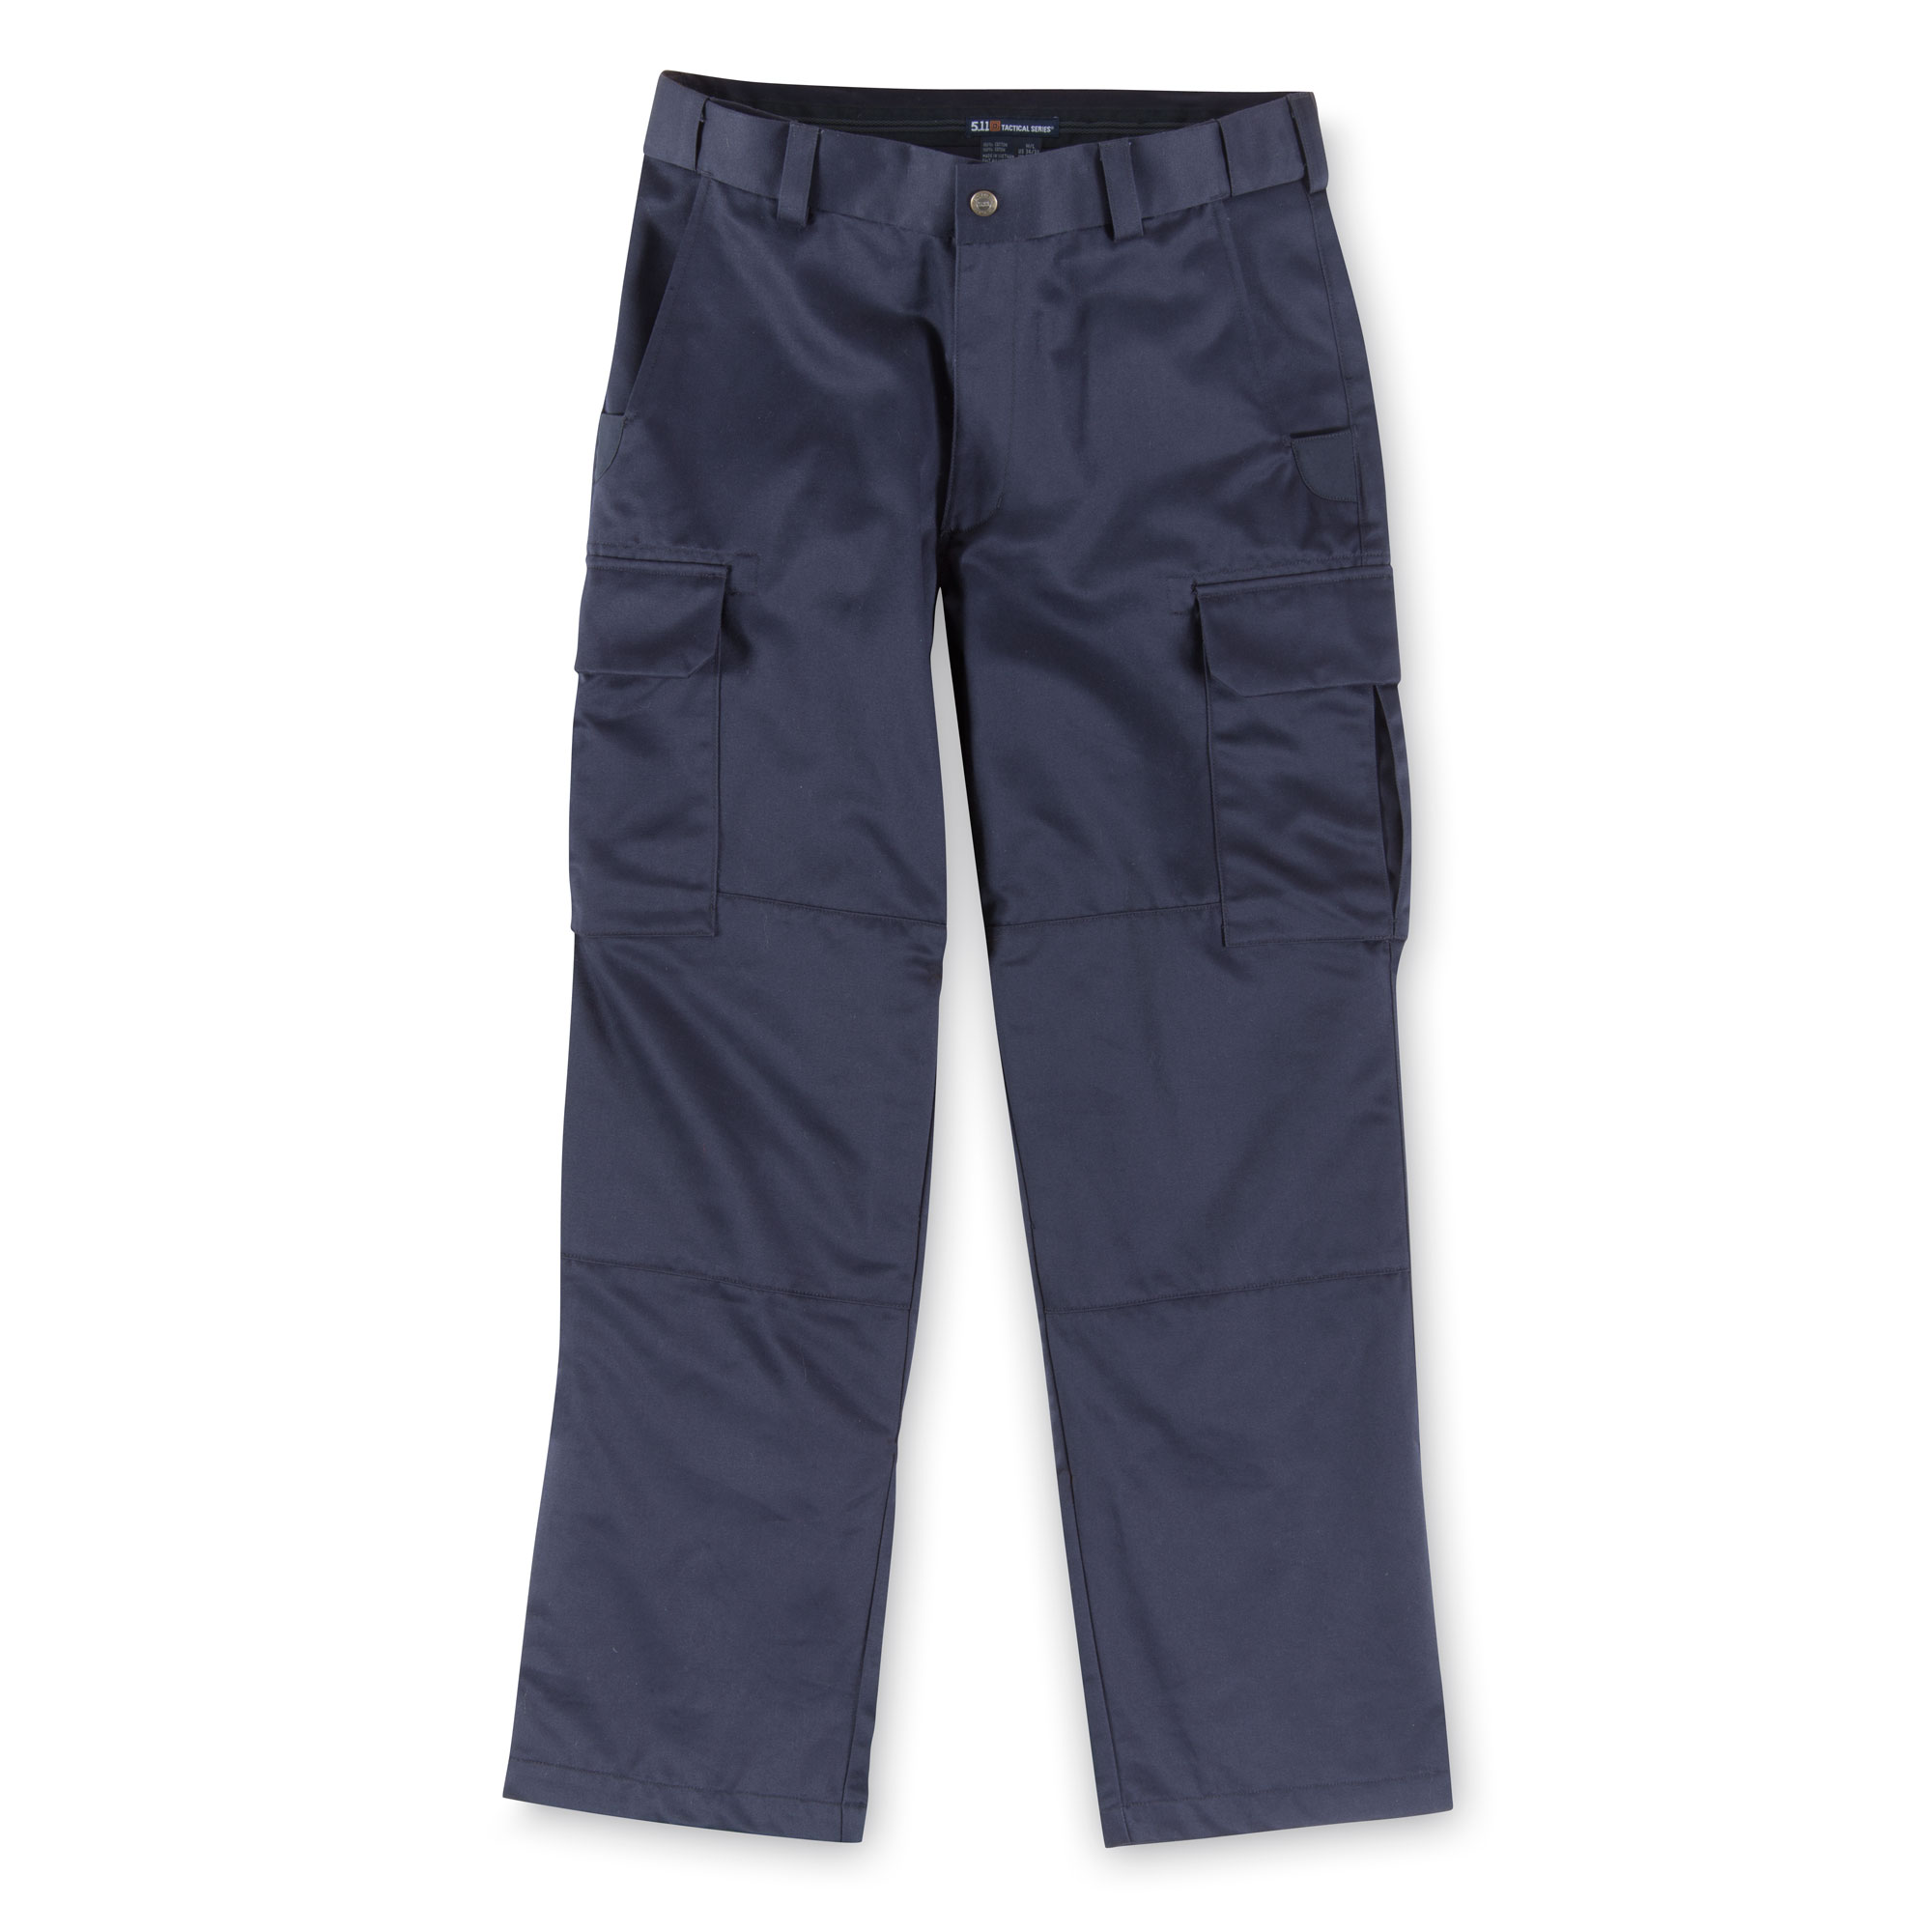 511 Tactical Pants 39 Size for Men for sale  eBay